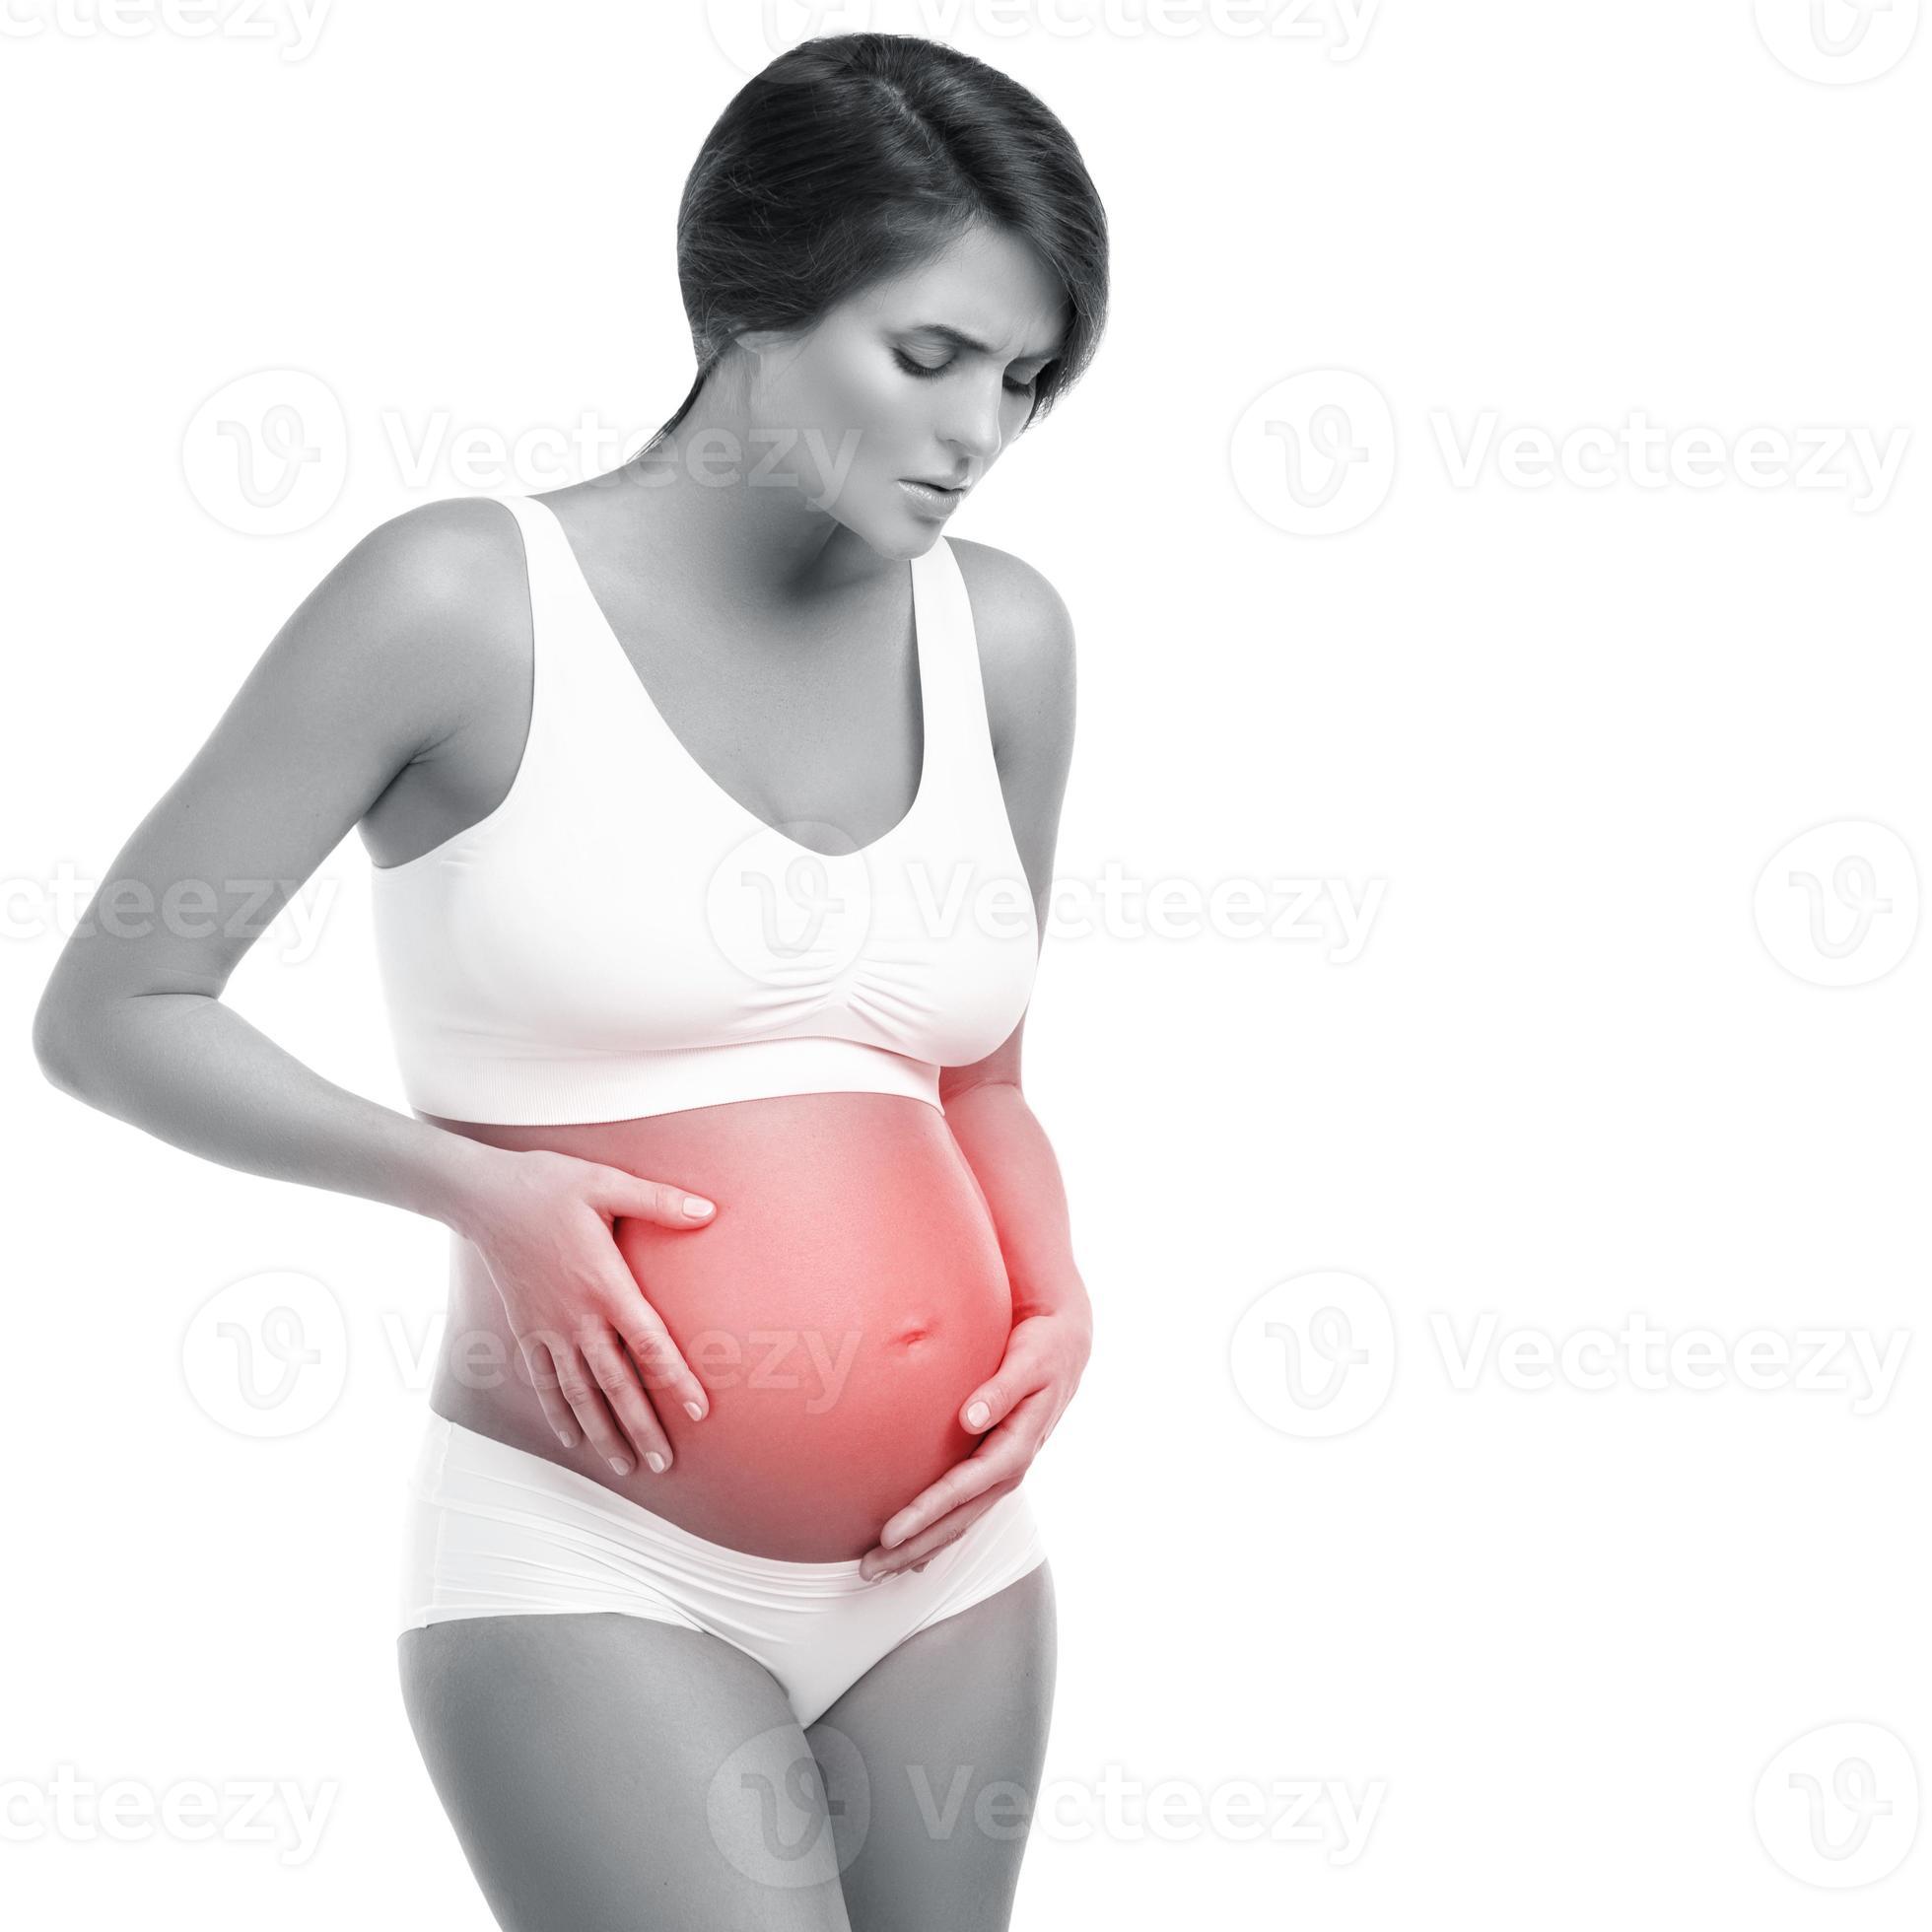 https://static.vecteezy.com/ti/photos-gratuite/p2/16237494-femme-enceinte-a-mal-au-ventre-photo.jpg